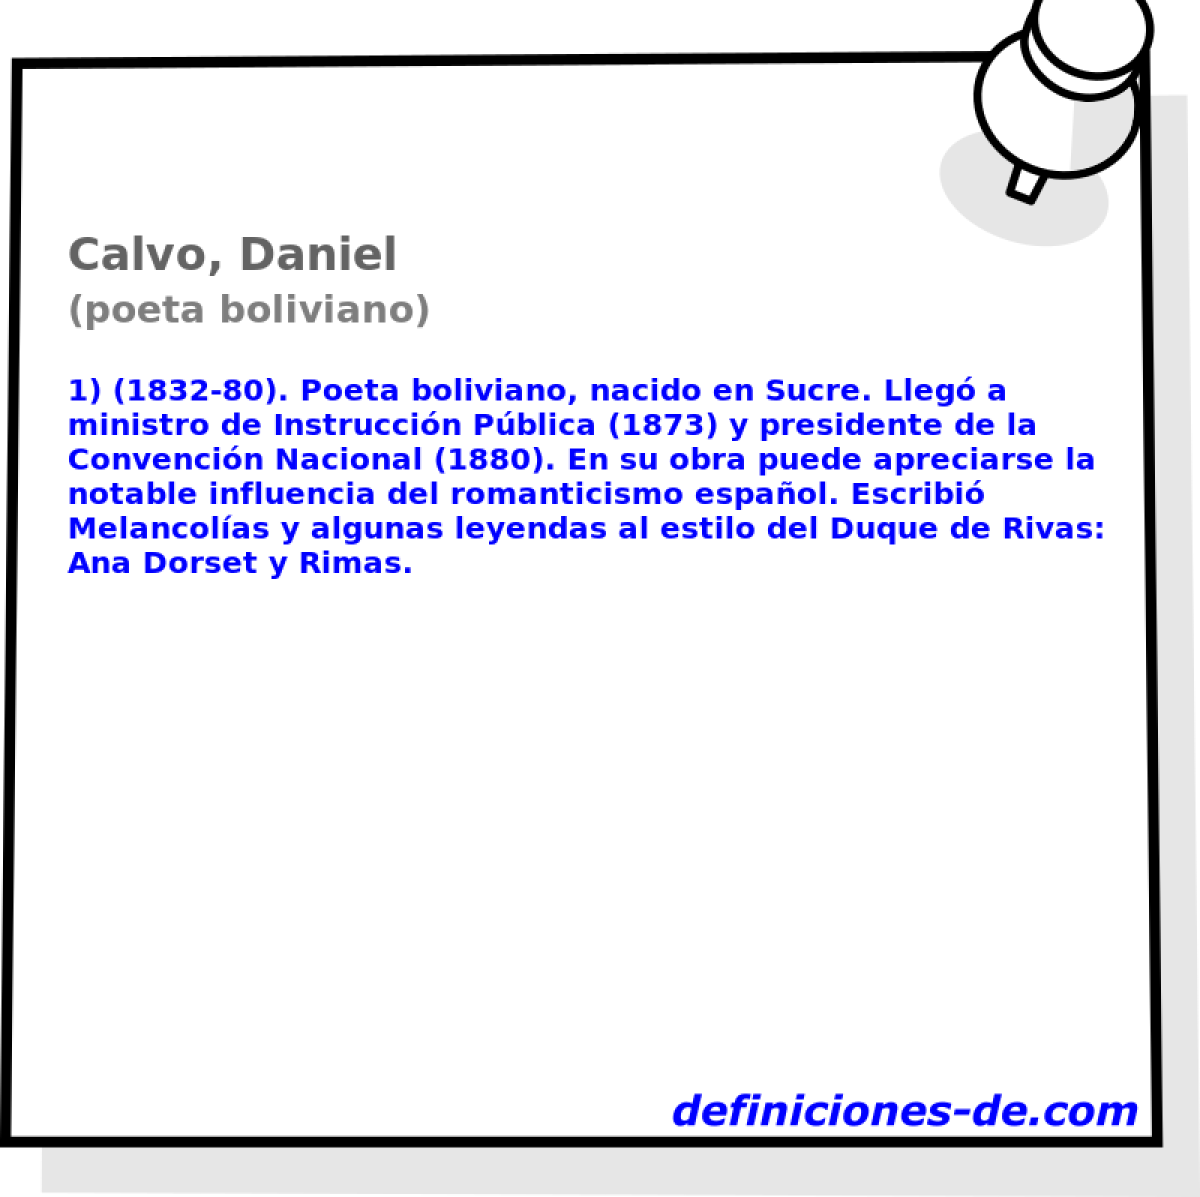 Calvo, Daniel (poeta boliviano)